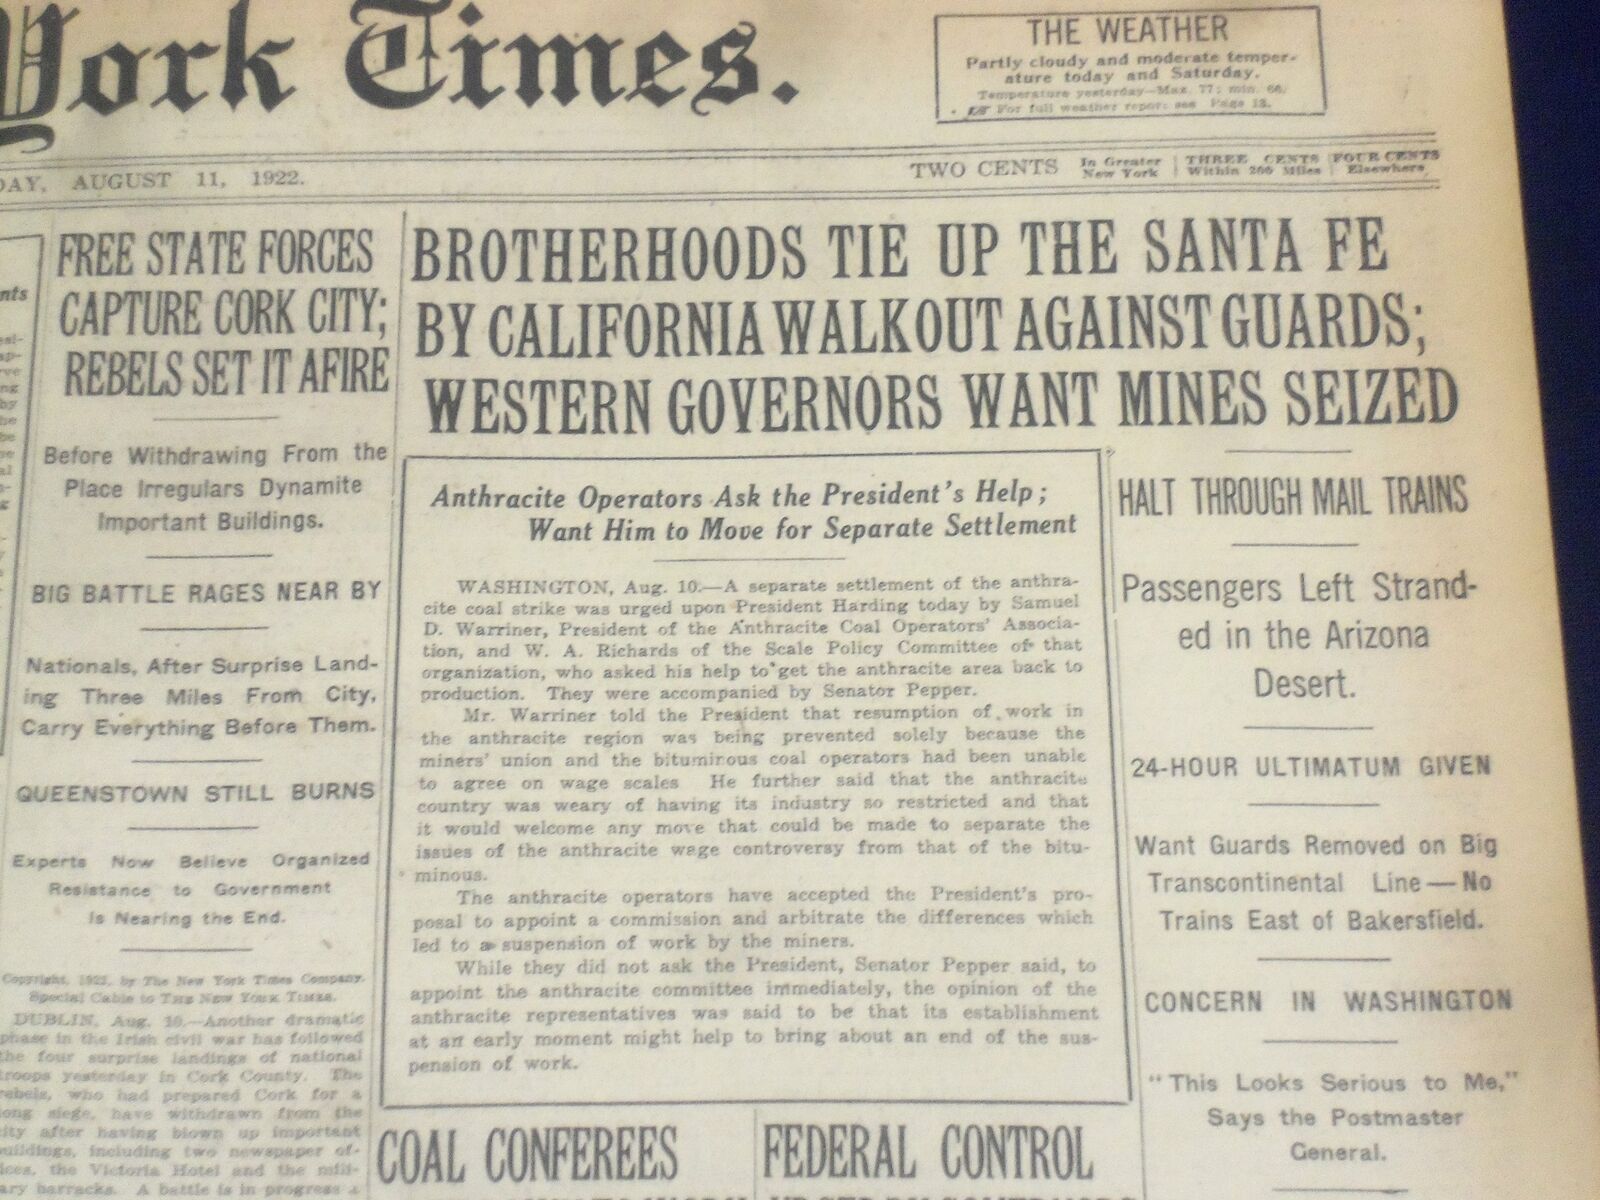 1922 AUGUST 11 NEW YORK TIMES - BROTHERHOODS TIE UP THE SANTA FE - NT 8369